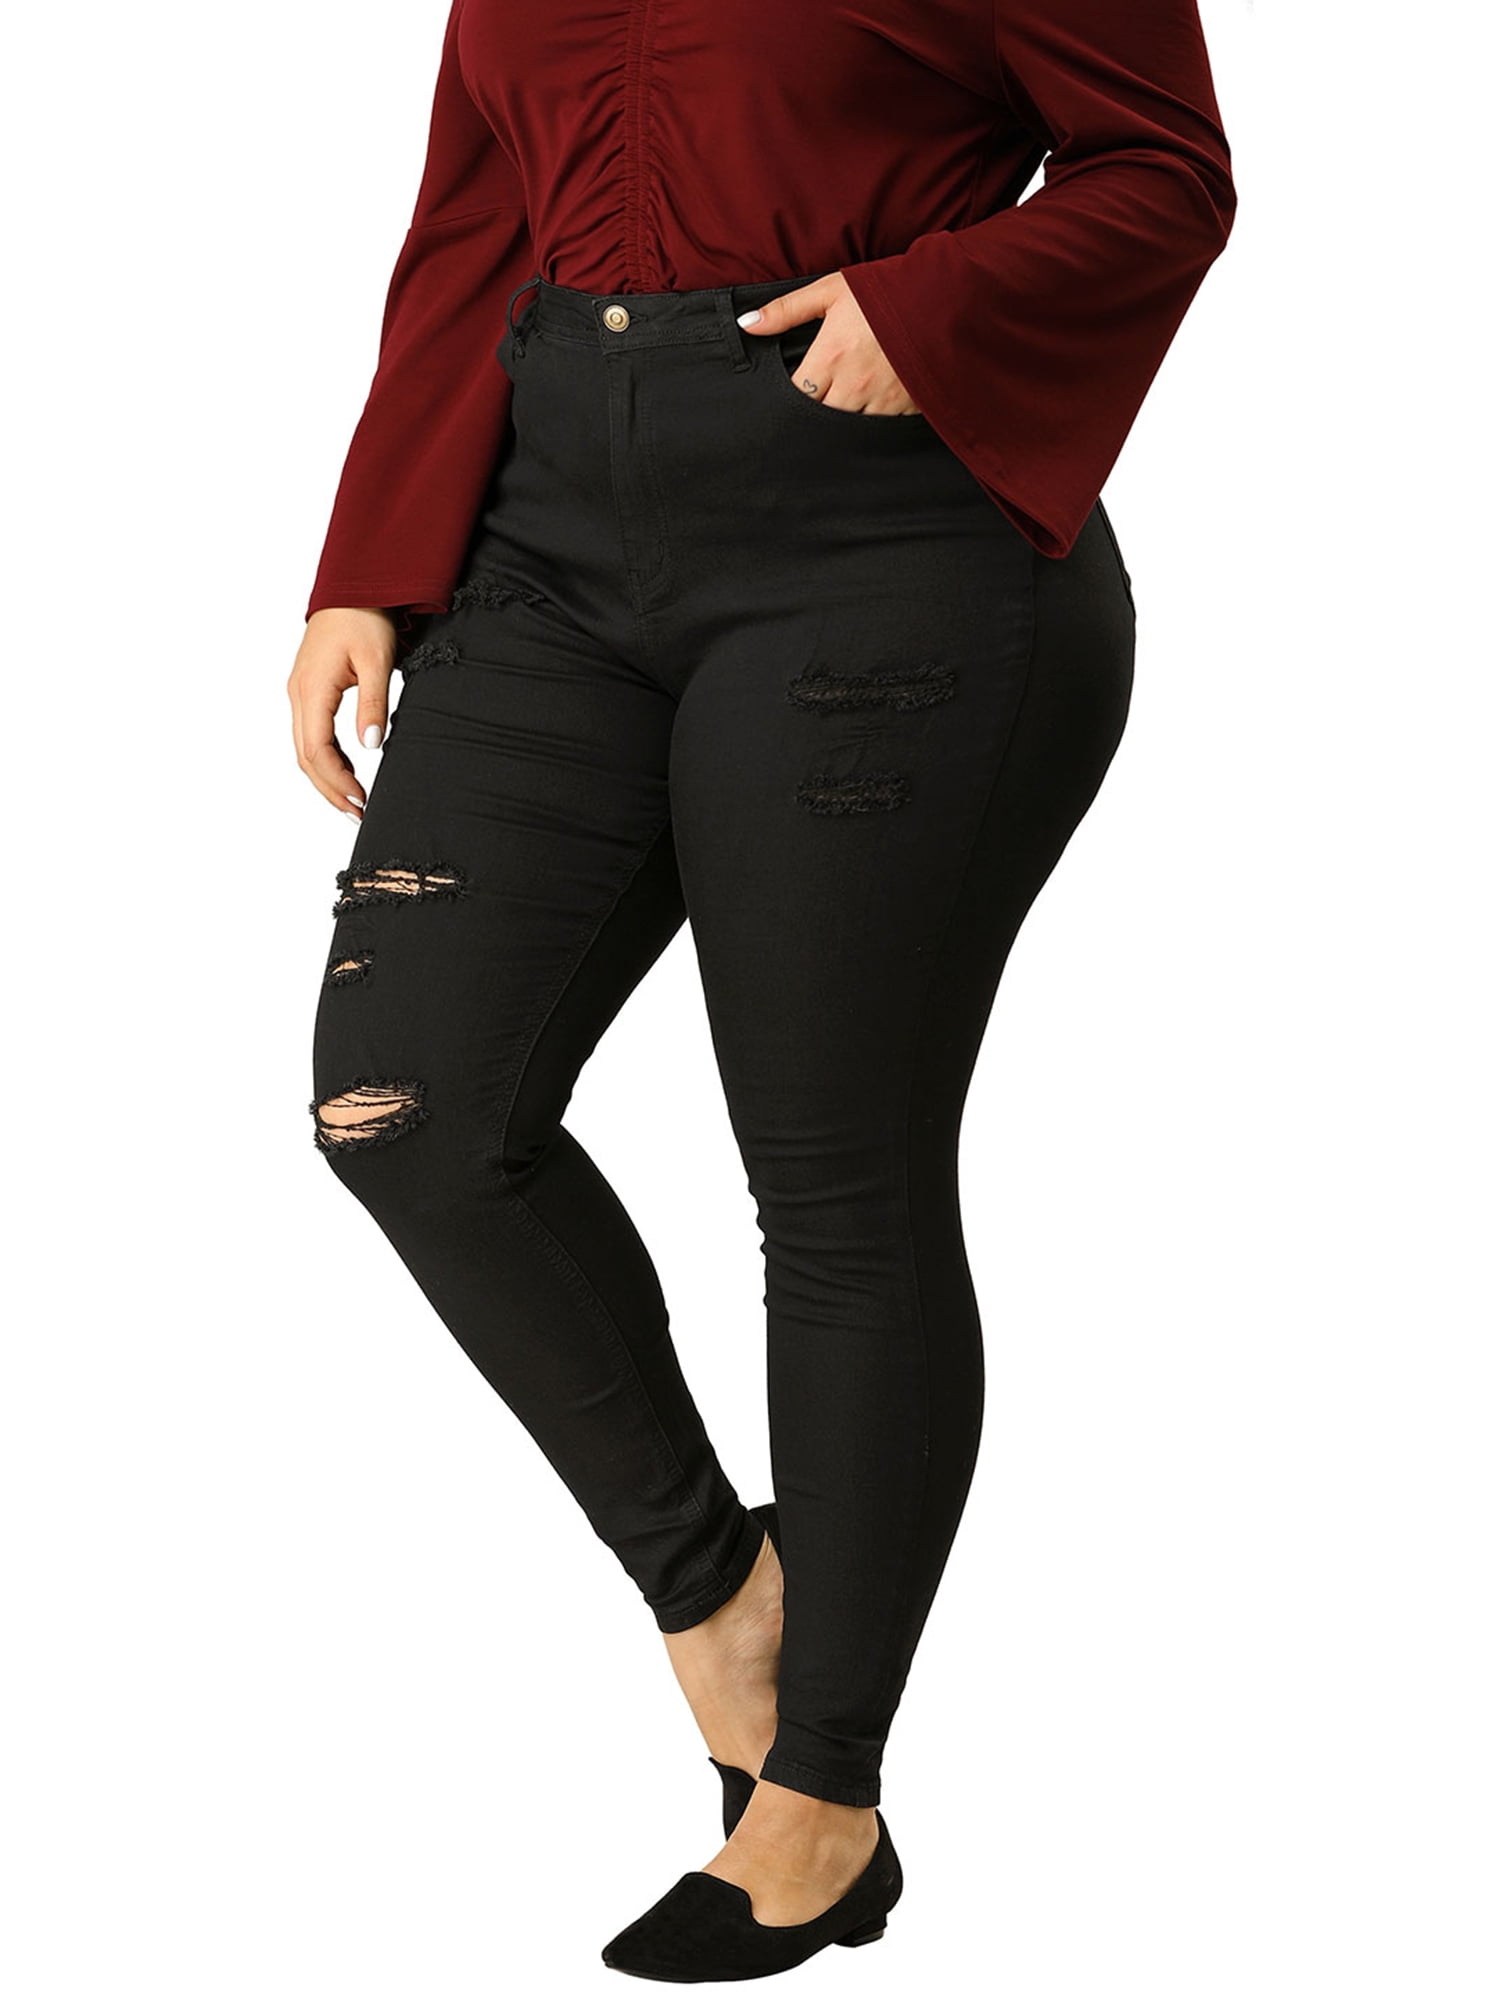 Women's Plus Size High Waist Zip Fly Skinny Ripped Jeans Black (Size 2X)